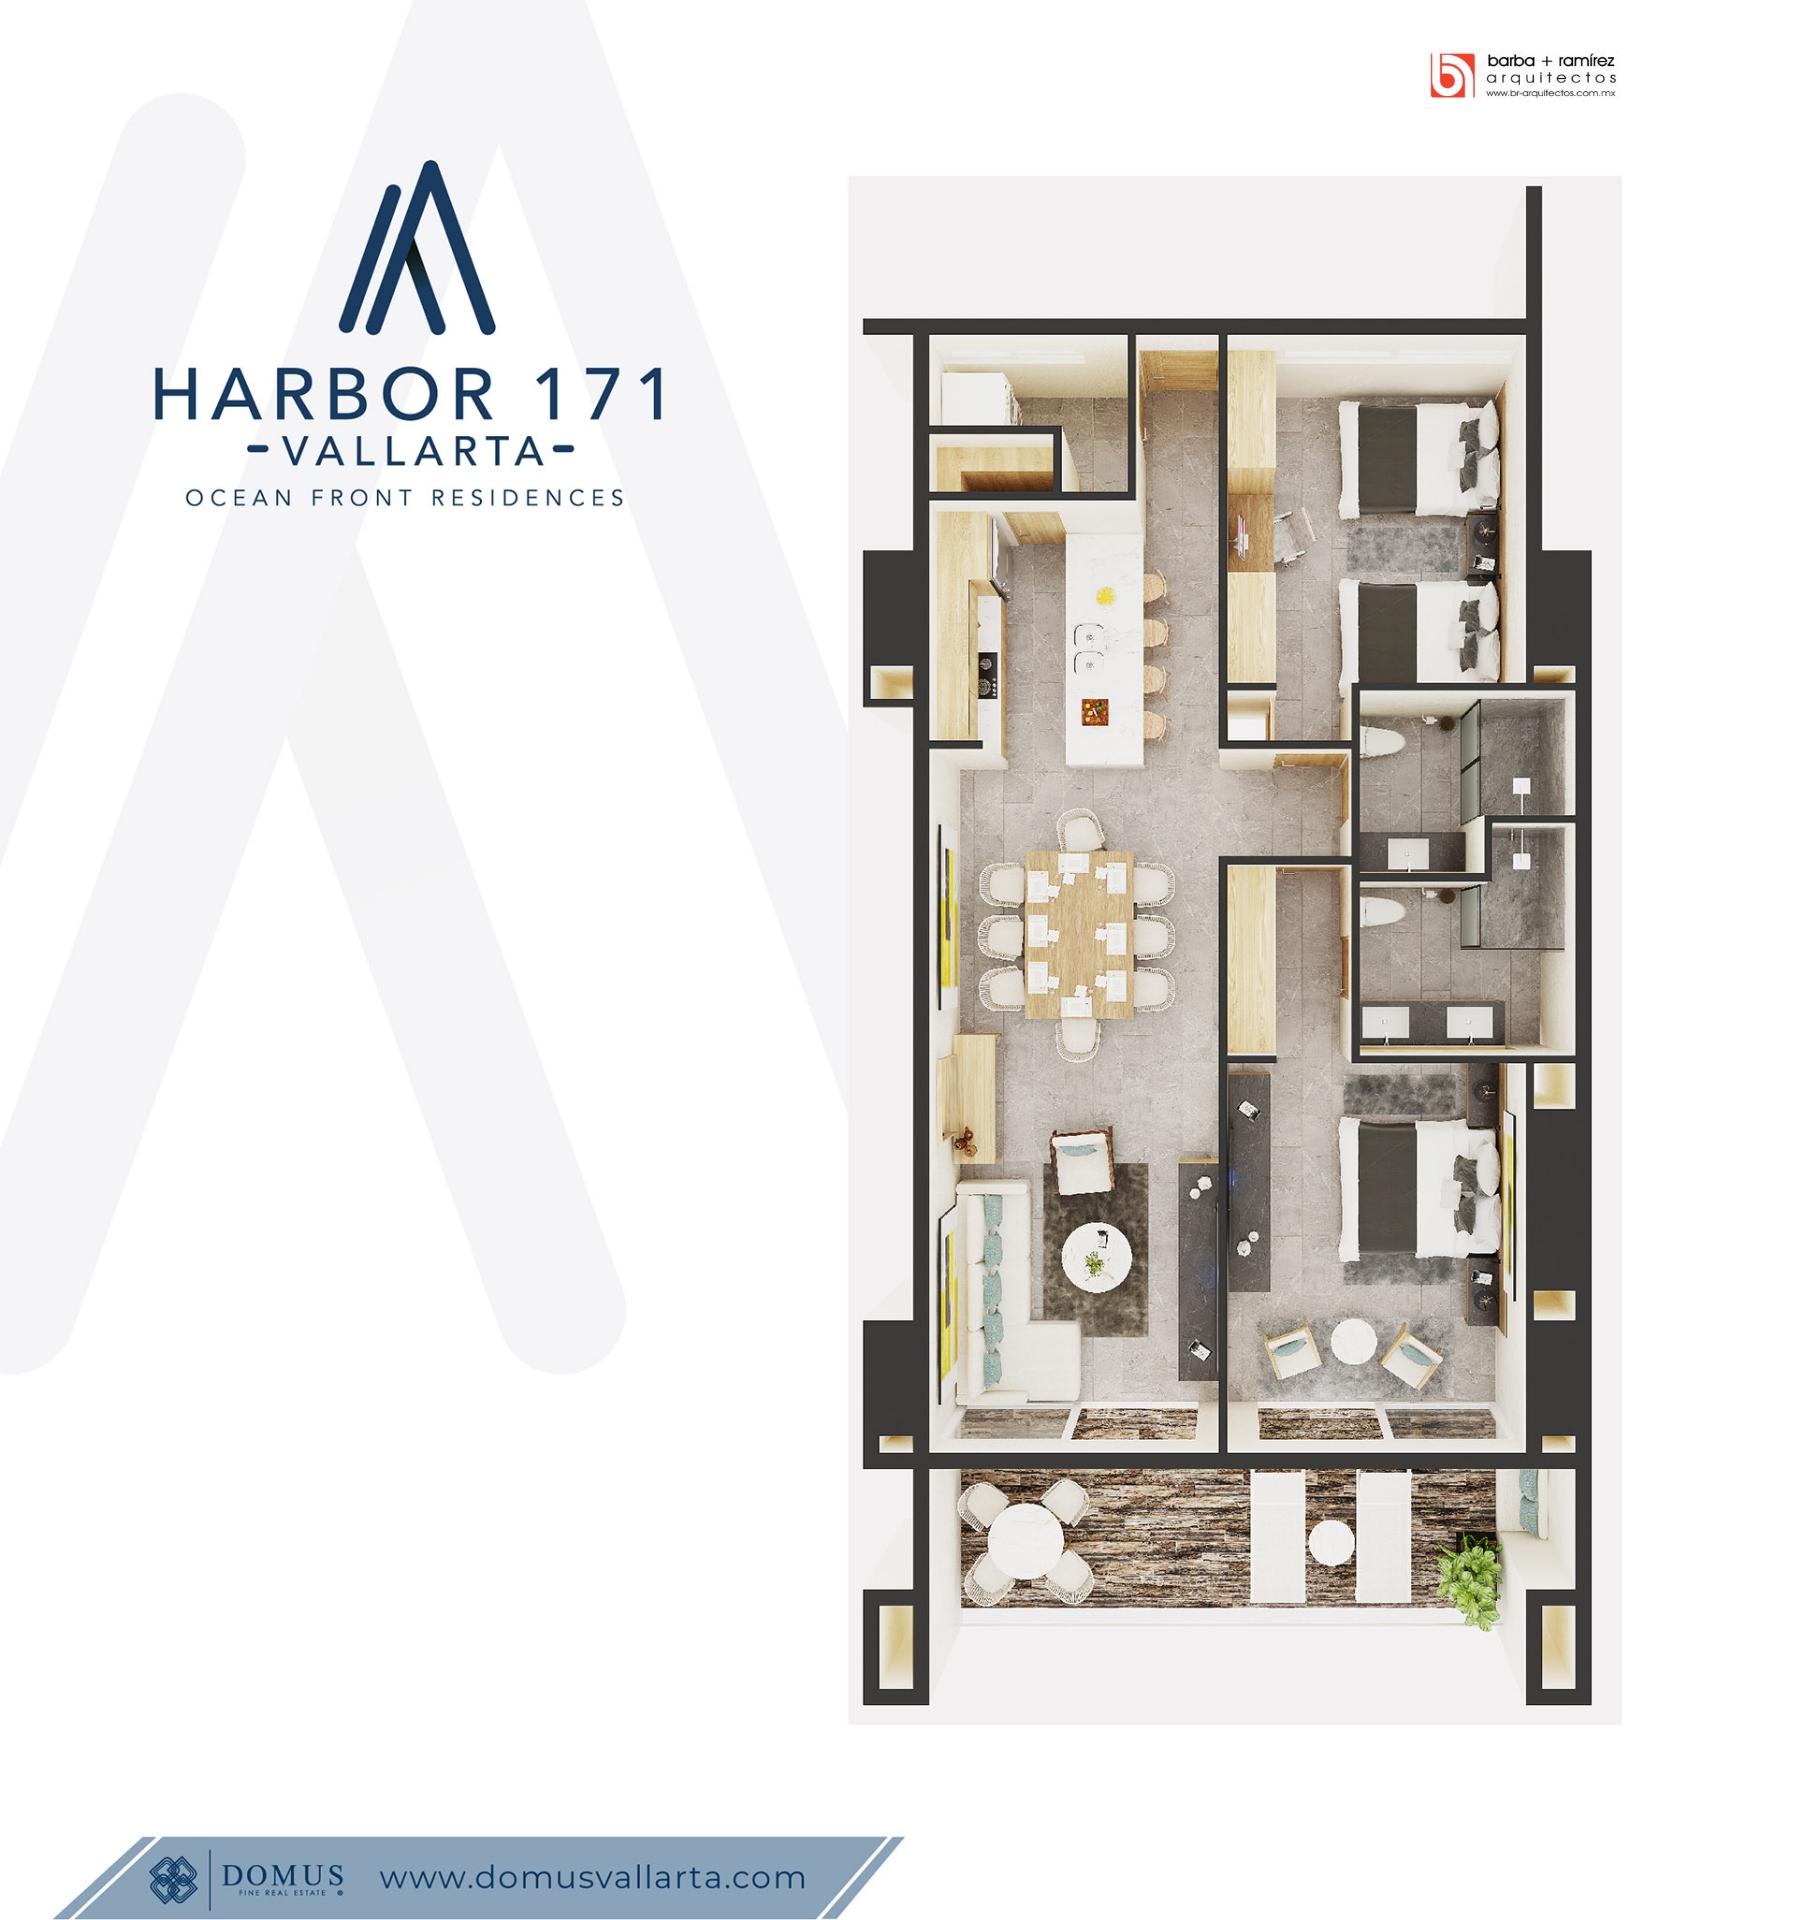 Unit 2306 Blueprint - Harbor 171